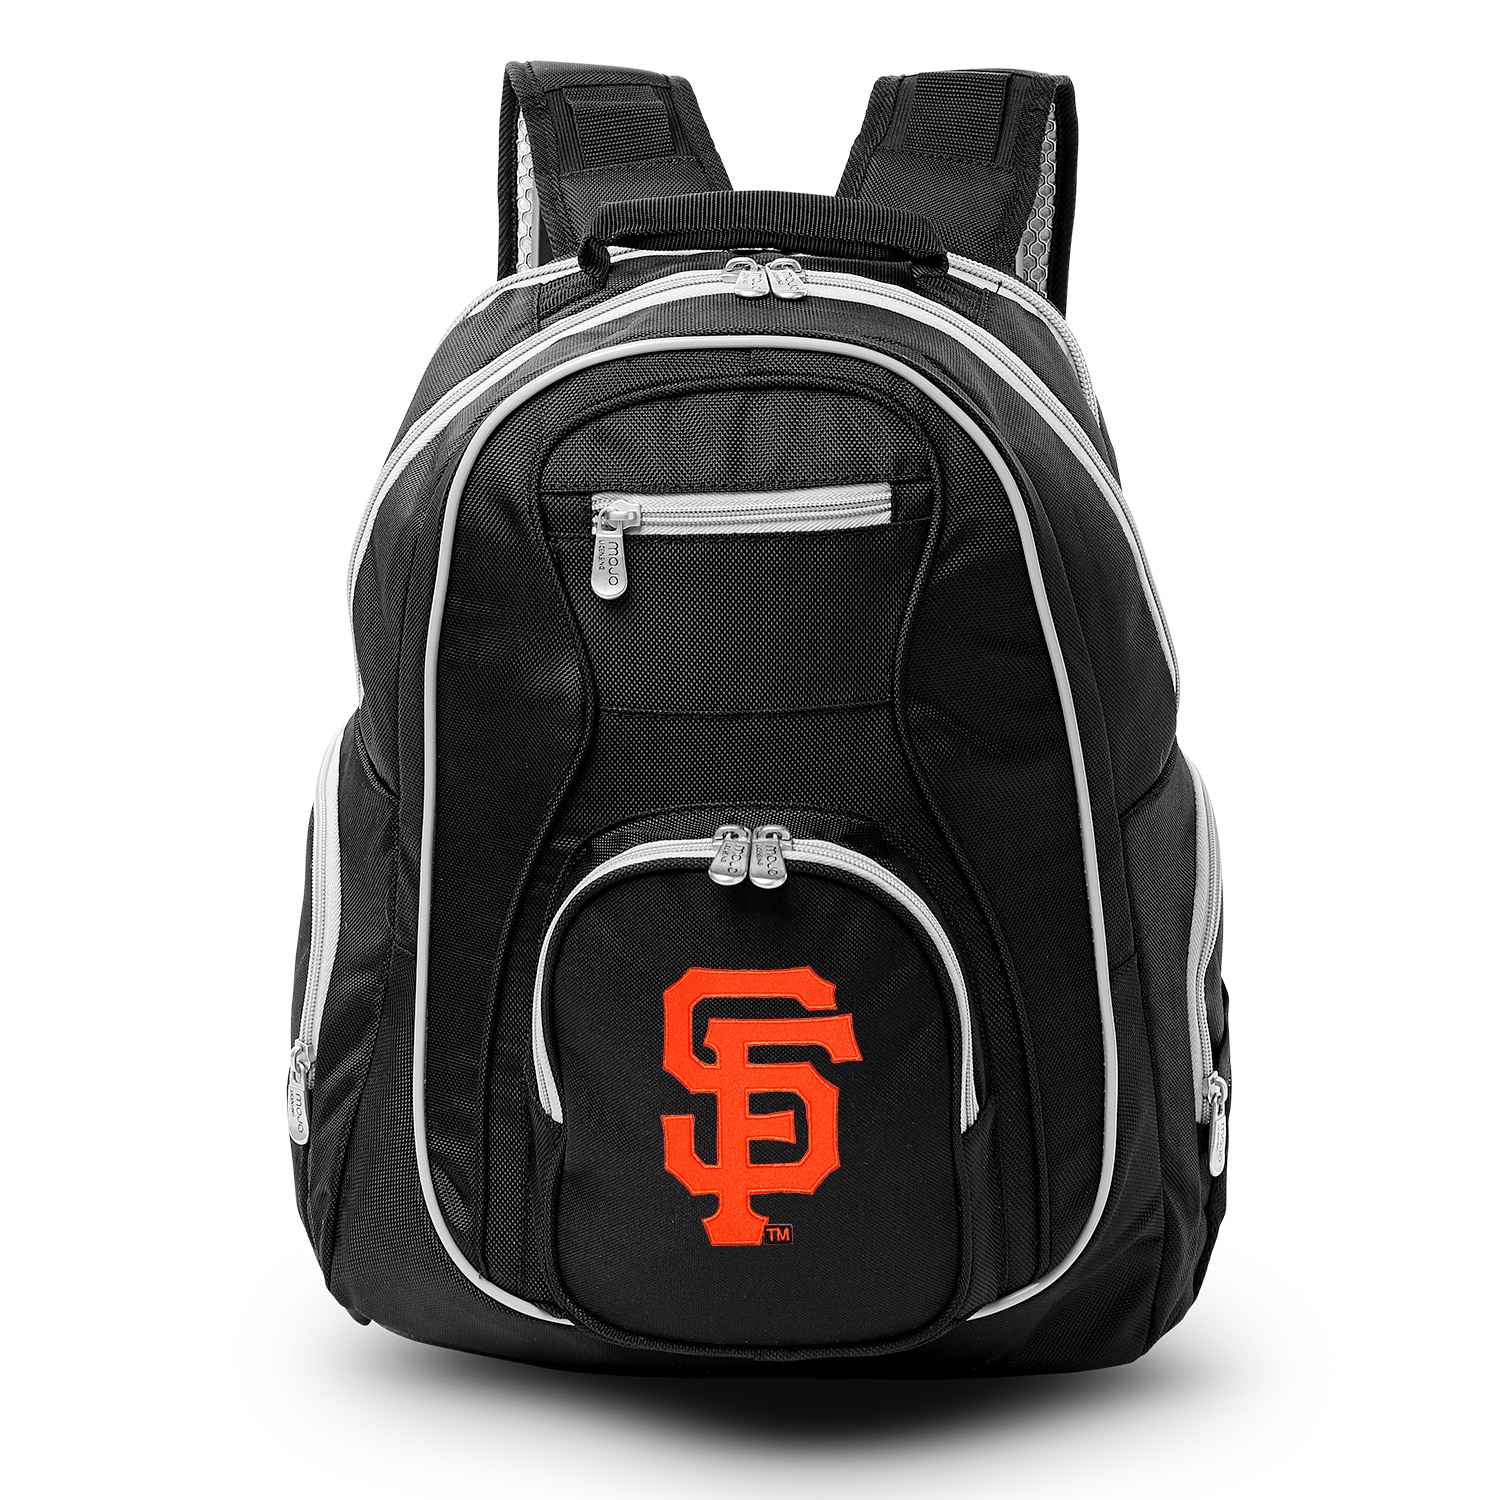 Officially Licensed MLB White Sox 18 Premium Tool Bag Backpack